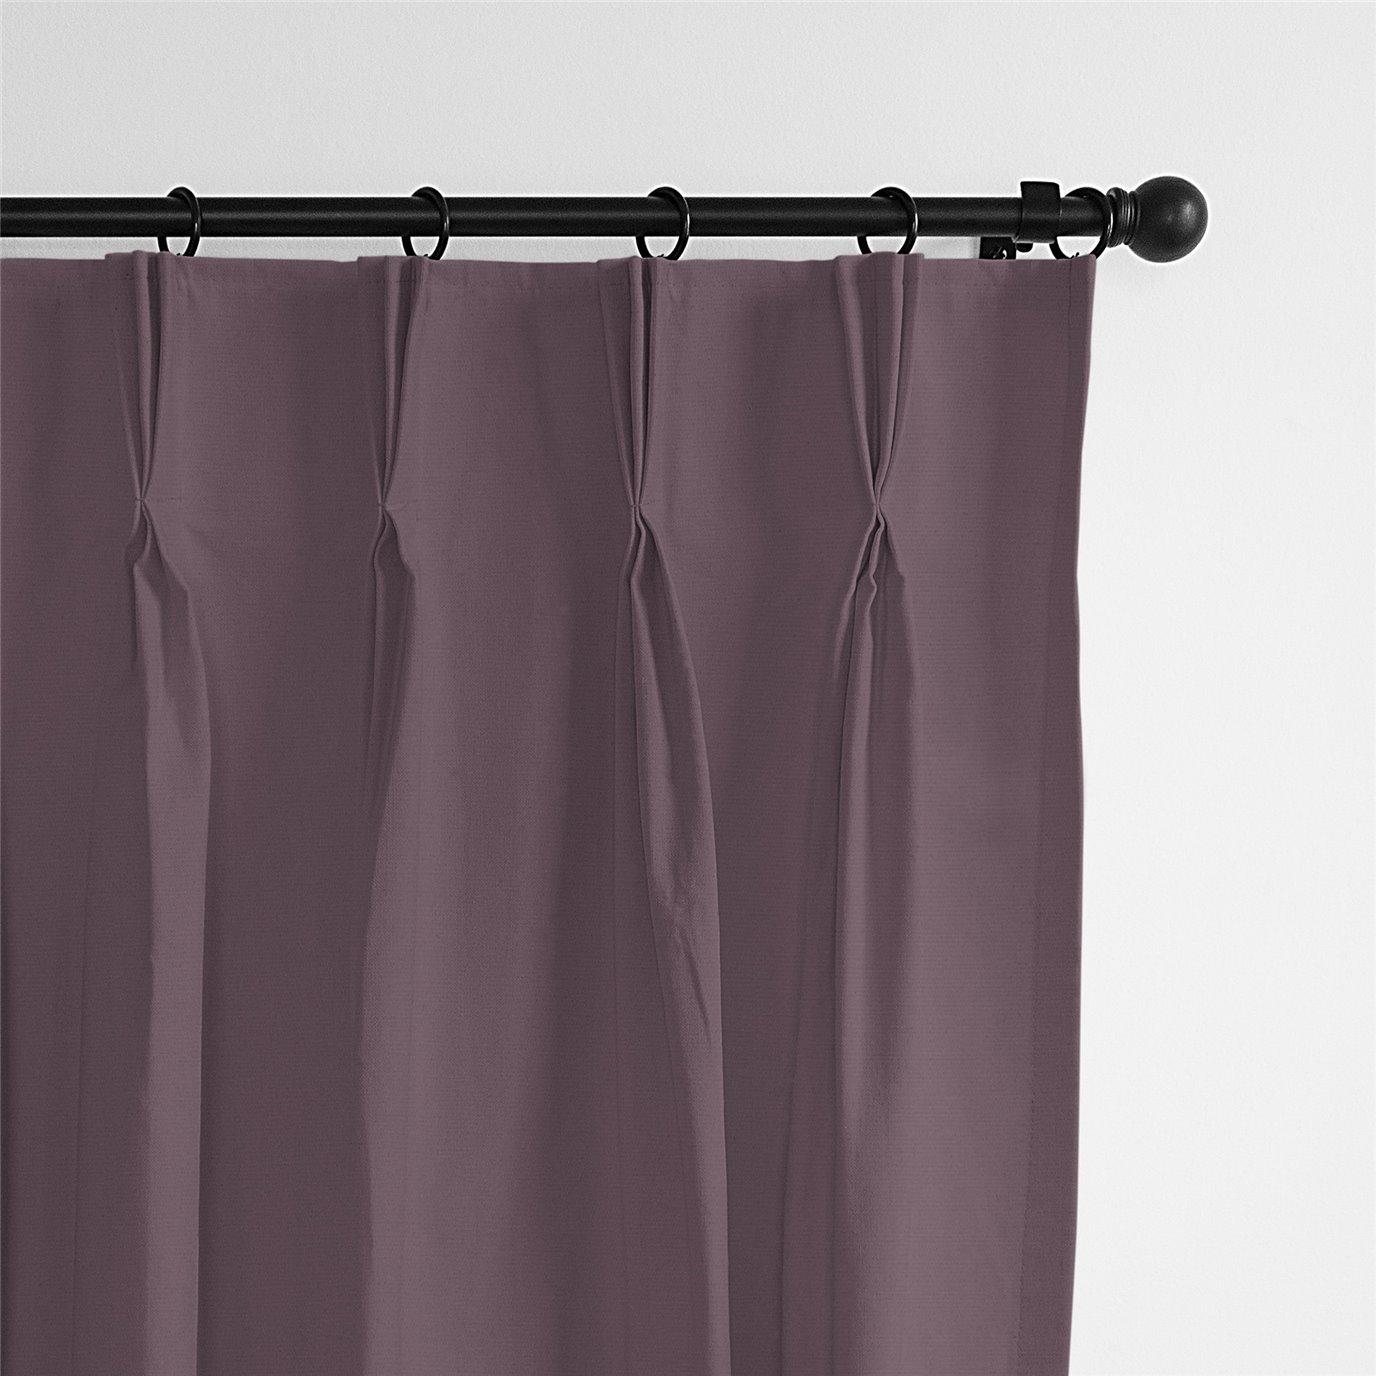 Braxton Purple Grape Pinch Pleat Drapery Panel - Pair - Size 40"x108"